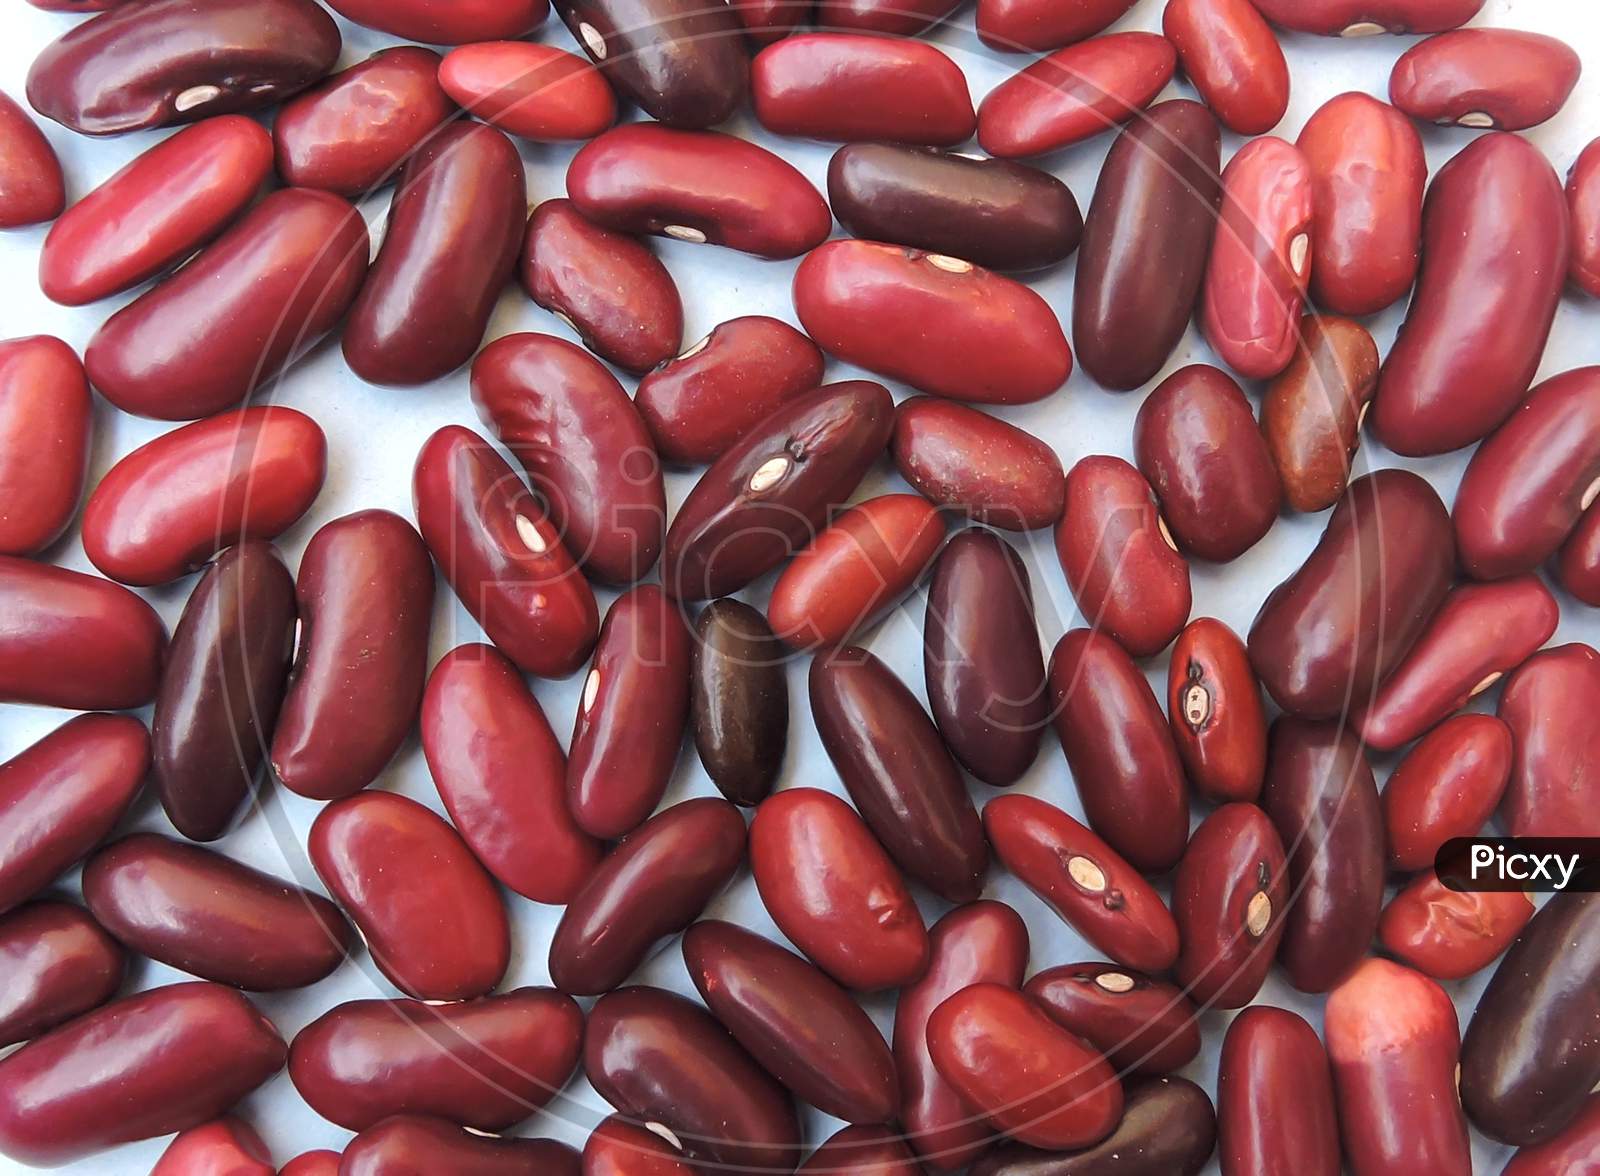 Red kidney beans or Rajma